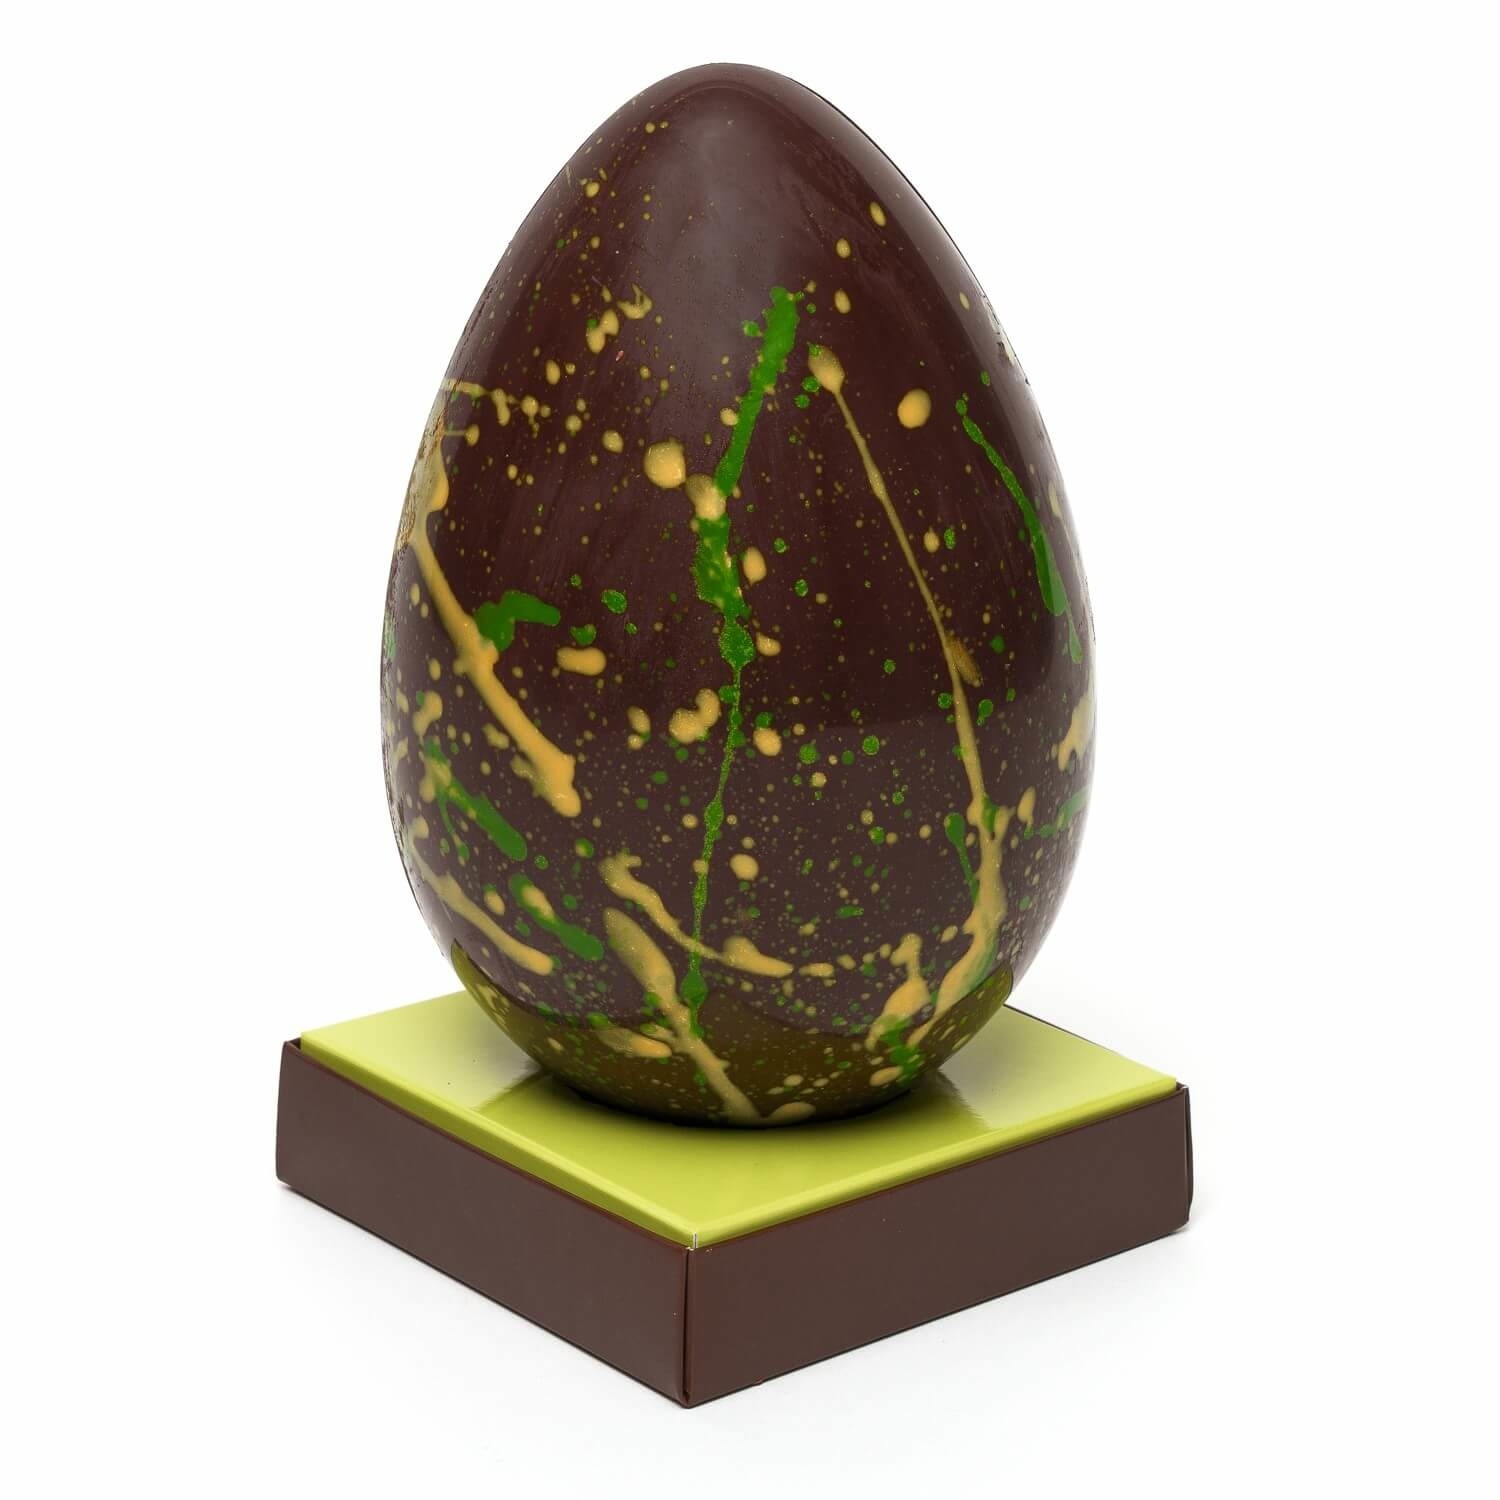 Splash yellow/green Easter egg with small eggs (dark chocolate